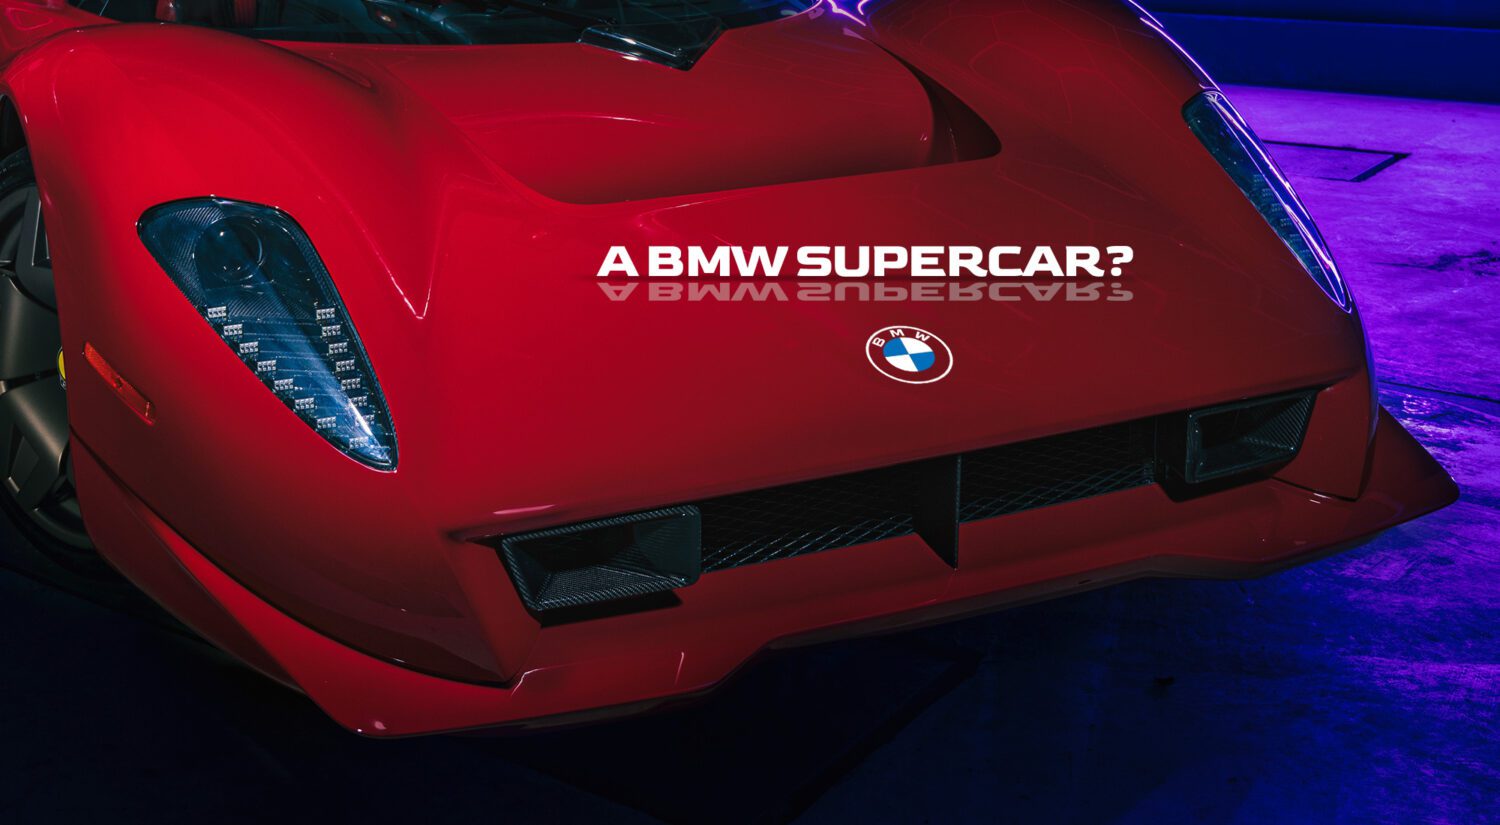 Why won’t BMW build a new supercar?